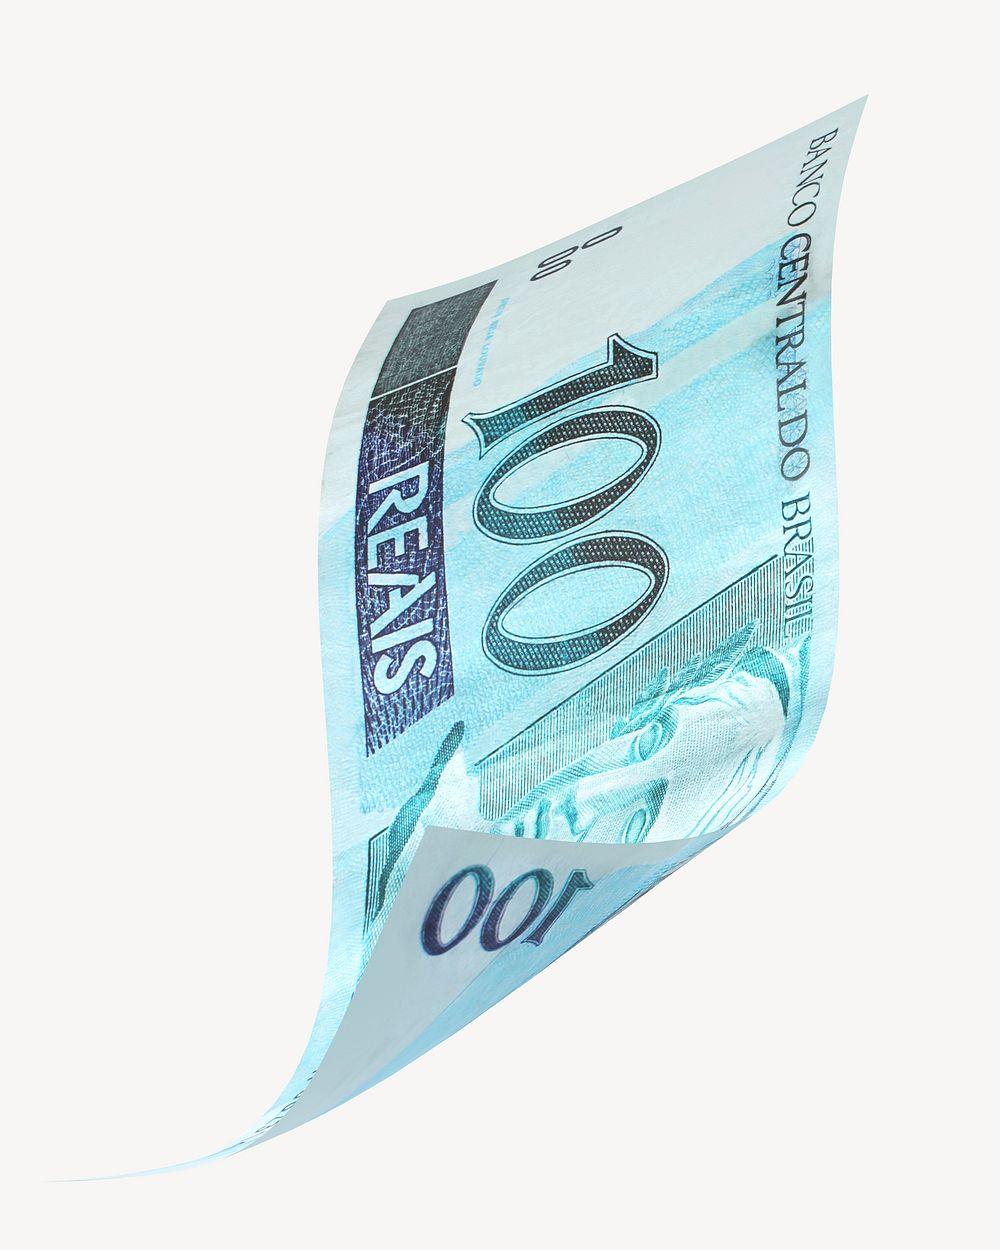 Brazilian 100 real bank note